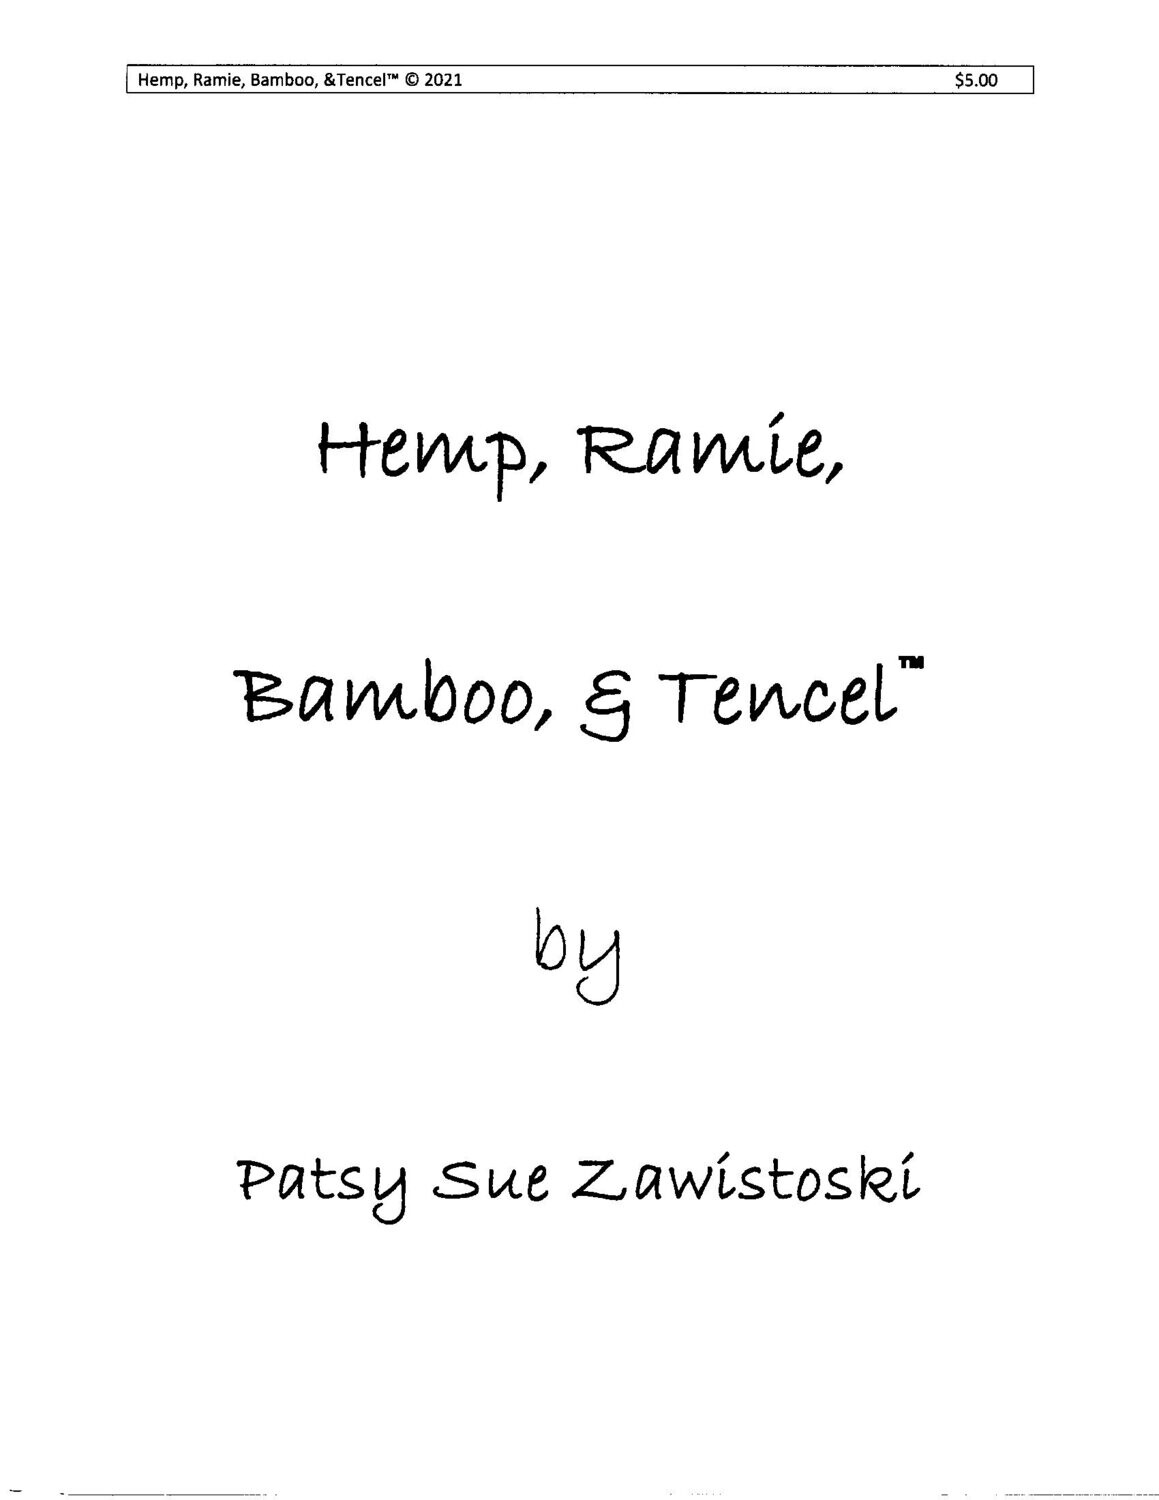 Hemp Ramie Tencel & Bamboo 2021